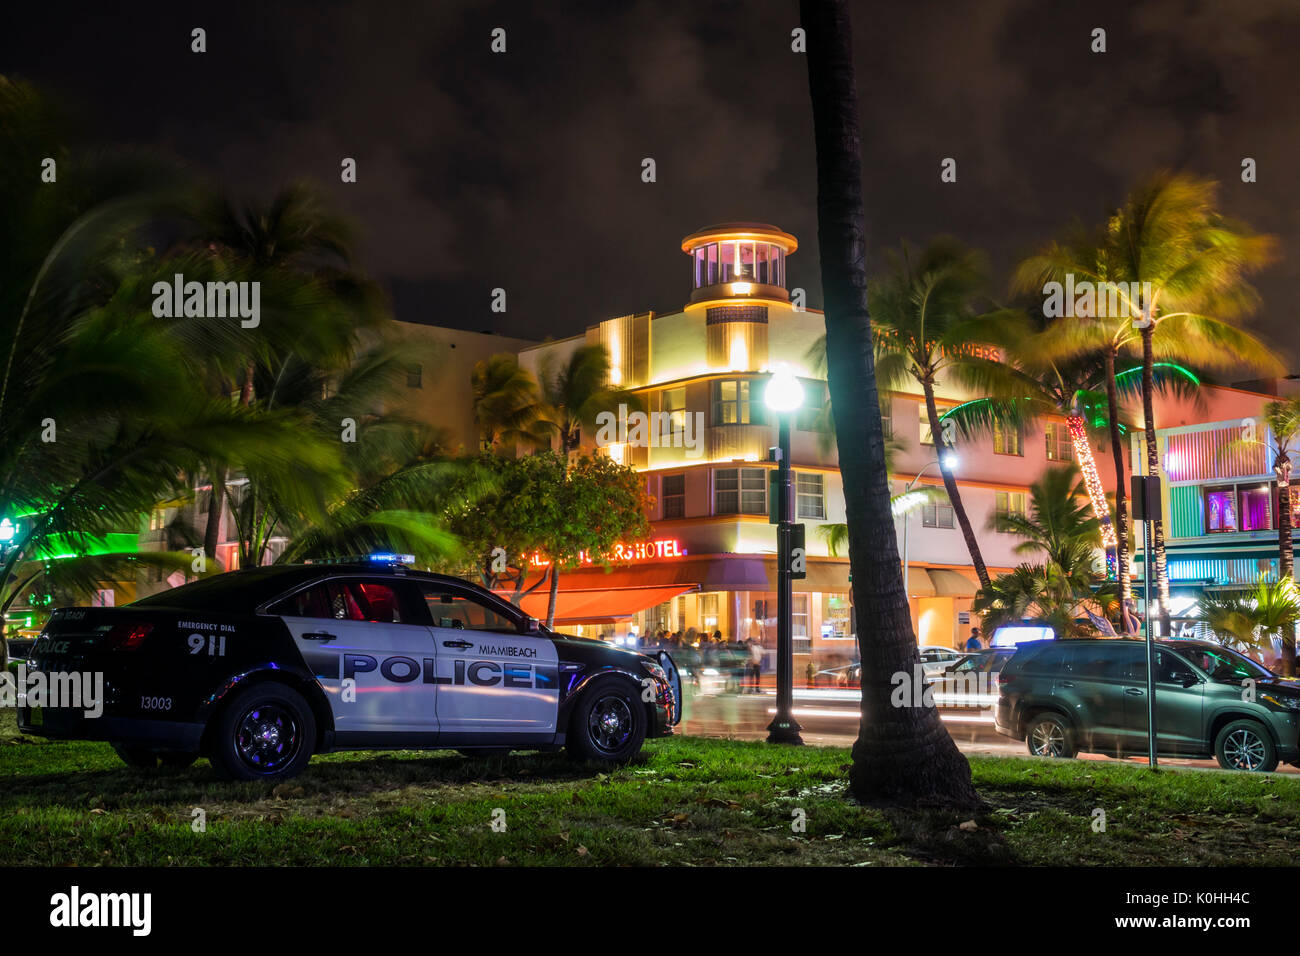 Miami Beach Florida,Ocean Drive,night evening Lummus Park,hotels,neon signs,lighting,palm trees,police car,Waldorf Towers,hotel,FL170430100 Stock Photo